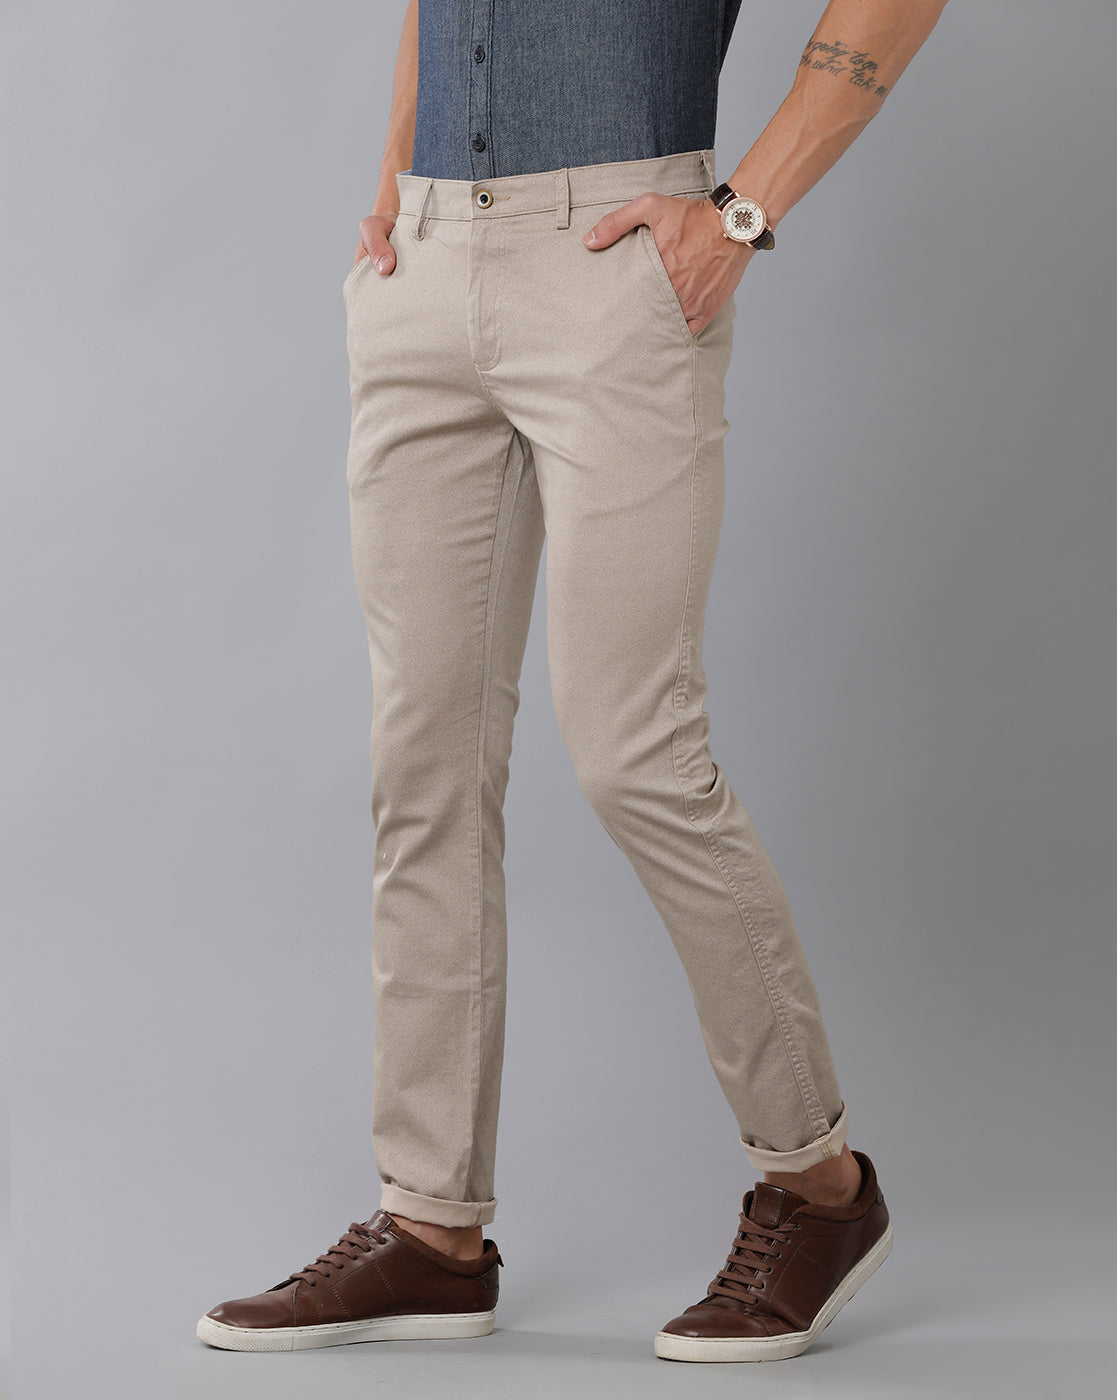 Buy NTGS Premium Cotton Lower Pajama Lounge Pants for Men Colour Skin  SizeXXL 3738 at Amazonin